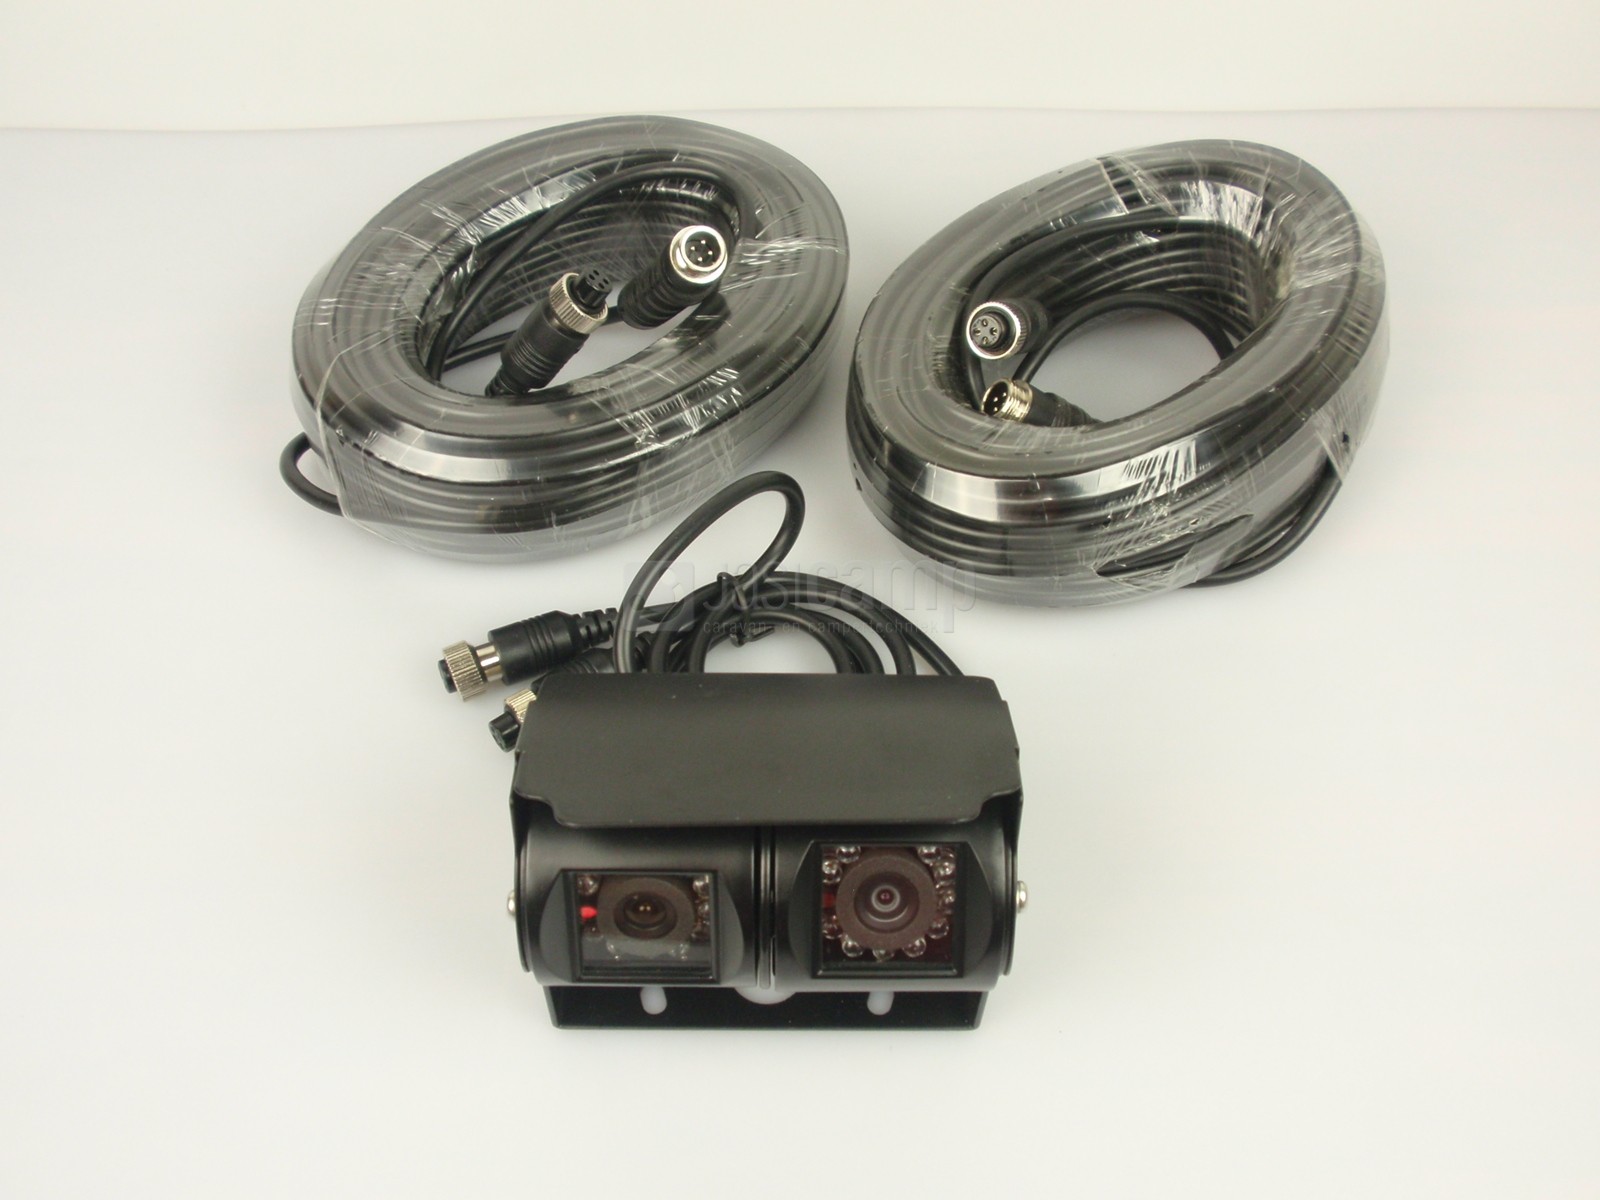 JCP-line losse kleuren CCD TWIN HD camera C30, met beschermkap IP68 systeem PAL.